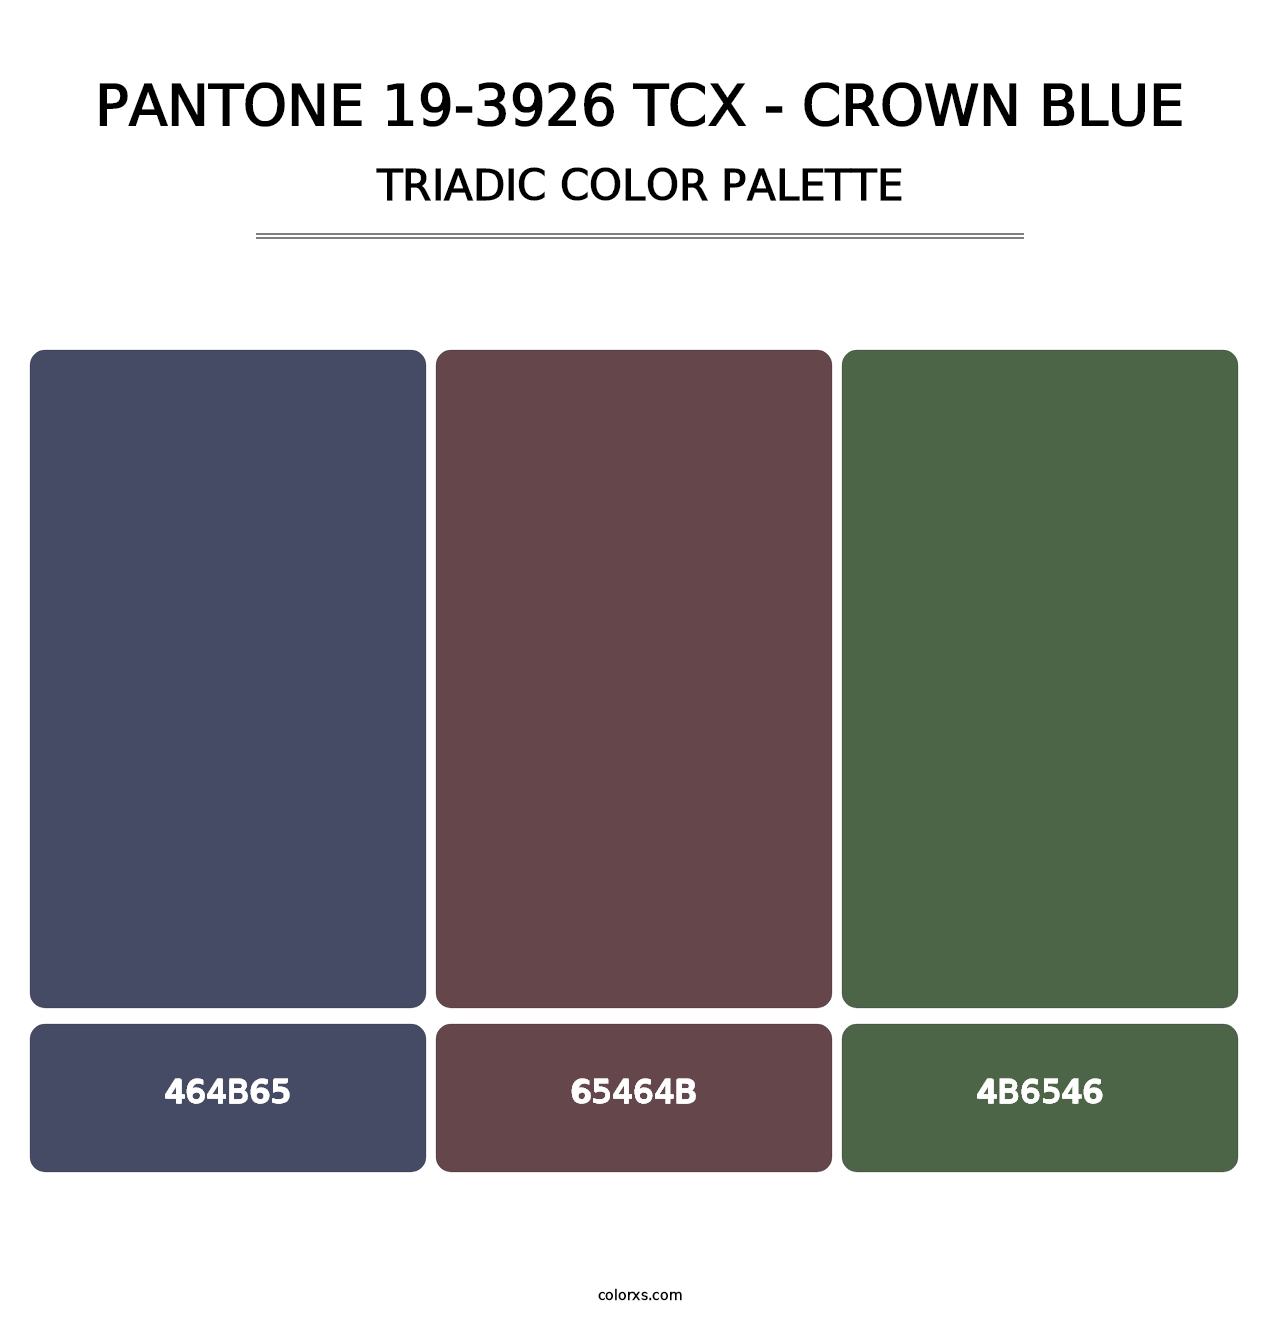 PANTONE 19-3926 TCX - Crown Blue - Triadic Color Palette